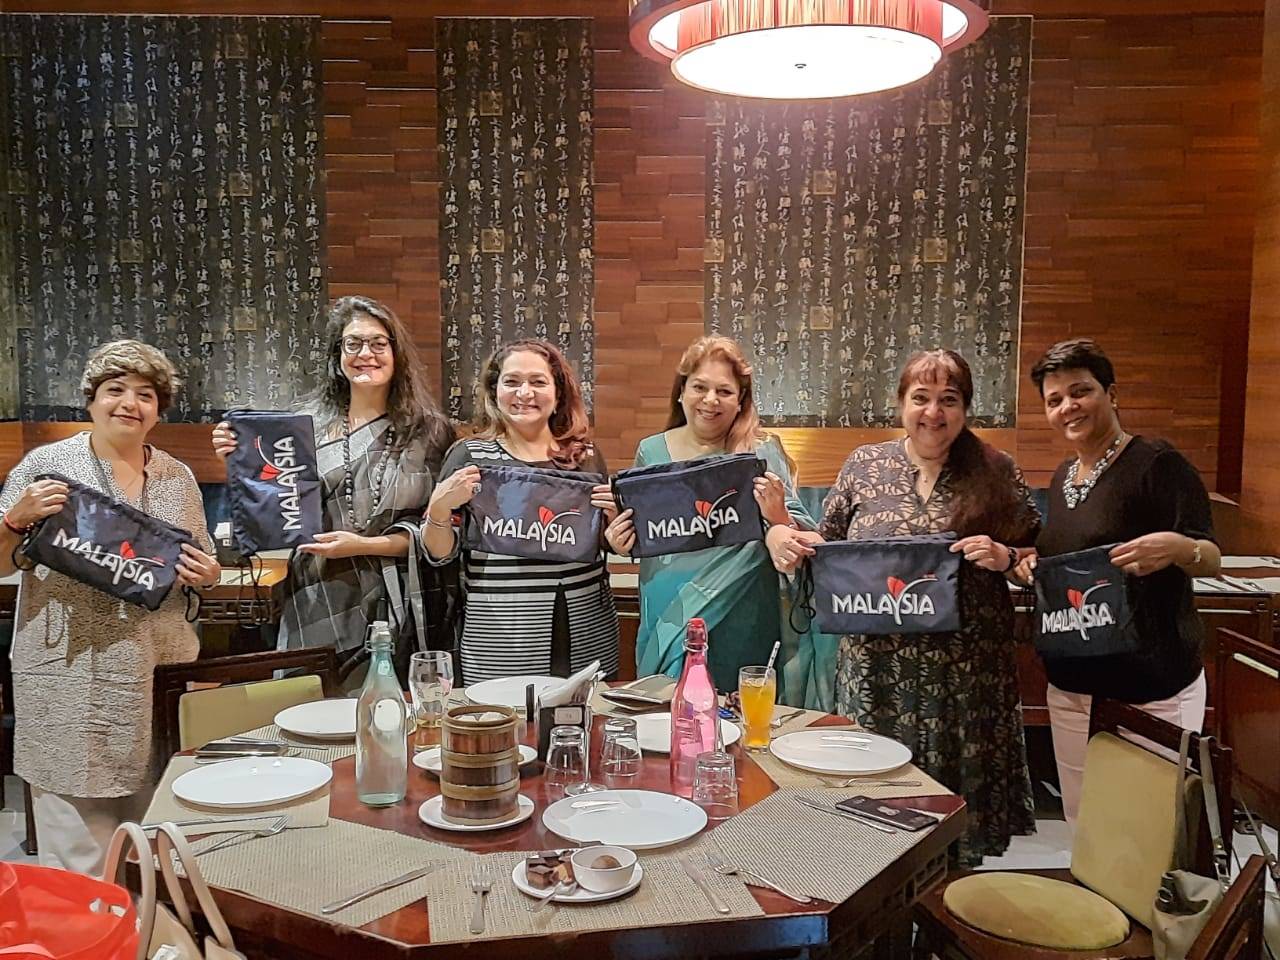 Tourism Malaysia Mumbai office honors women entrepreneurs on International Women's Day